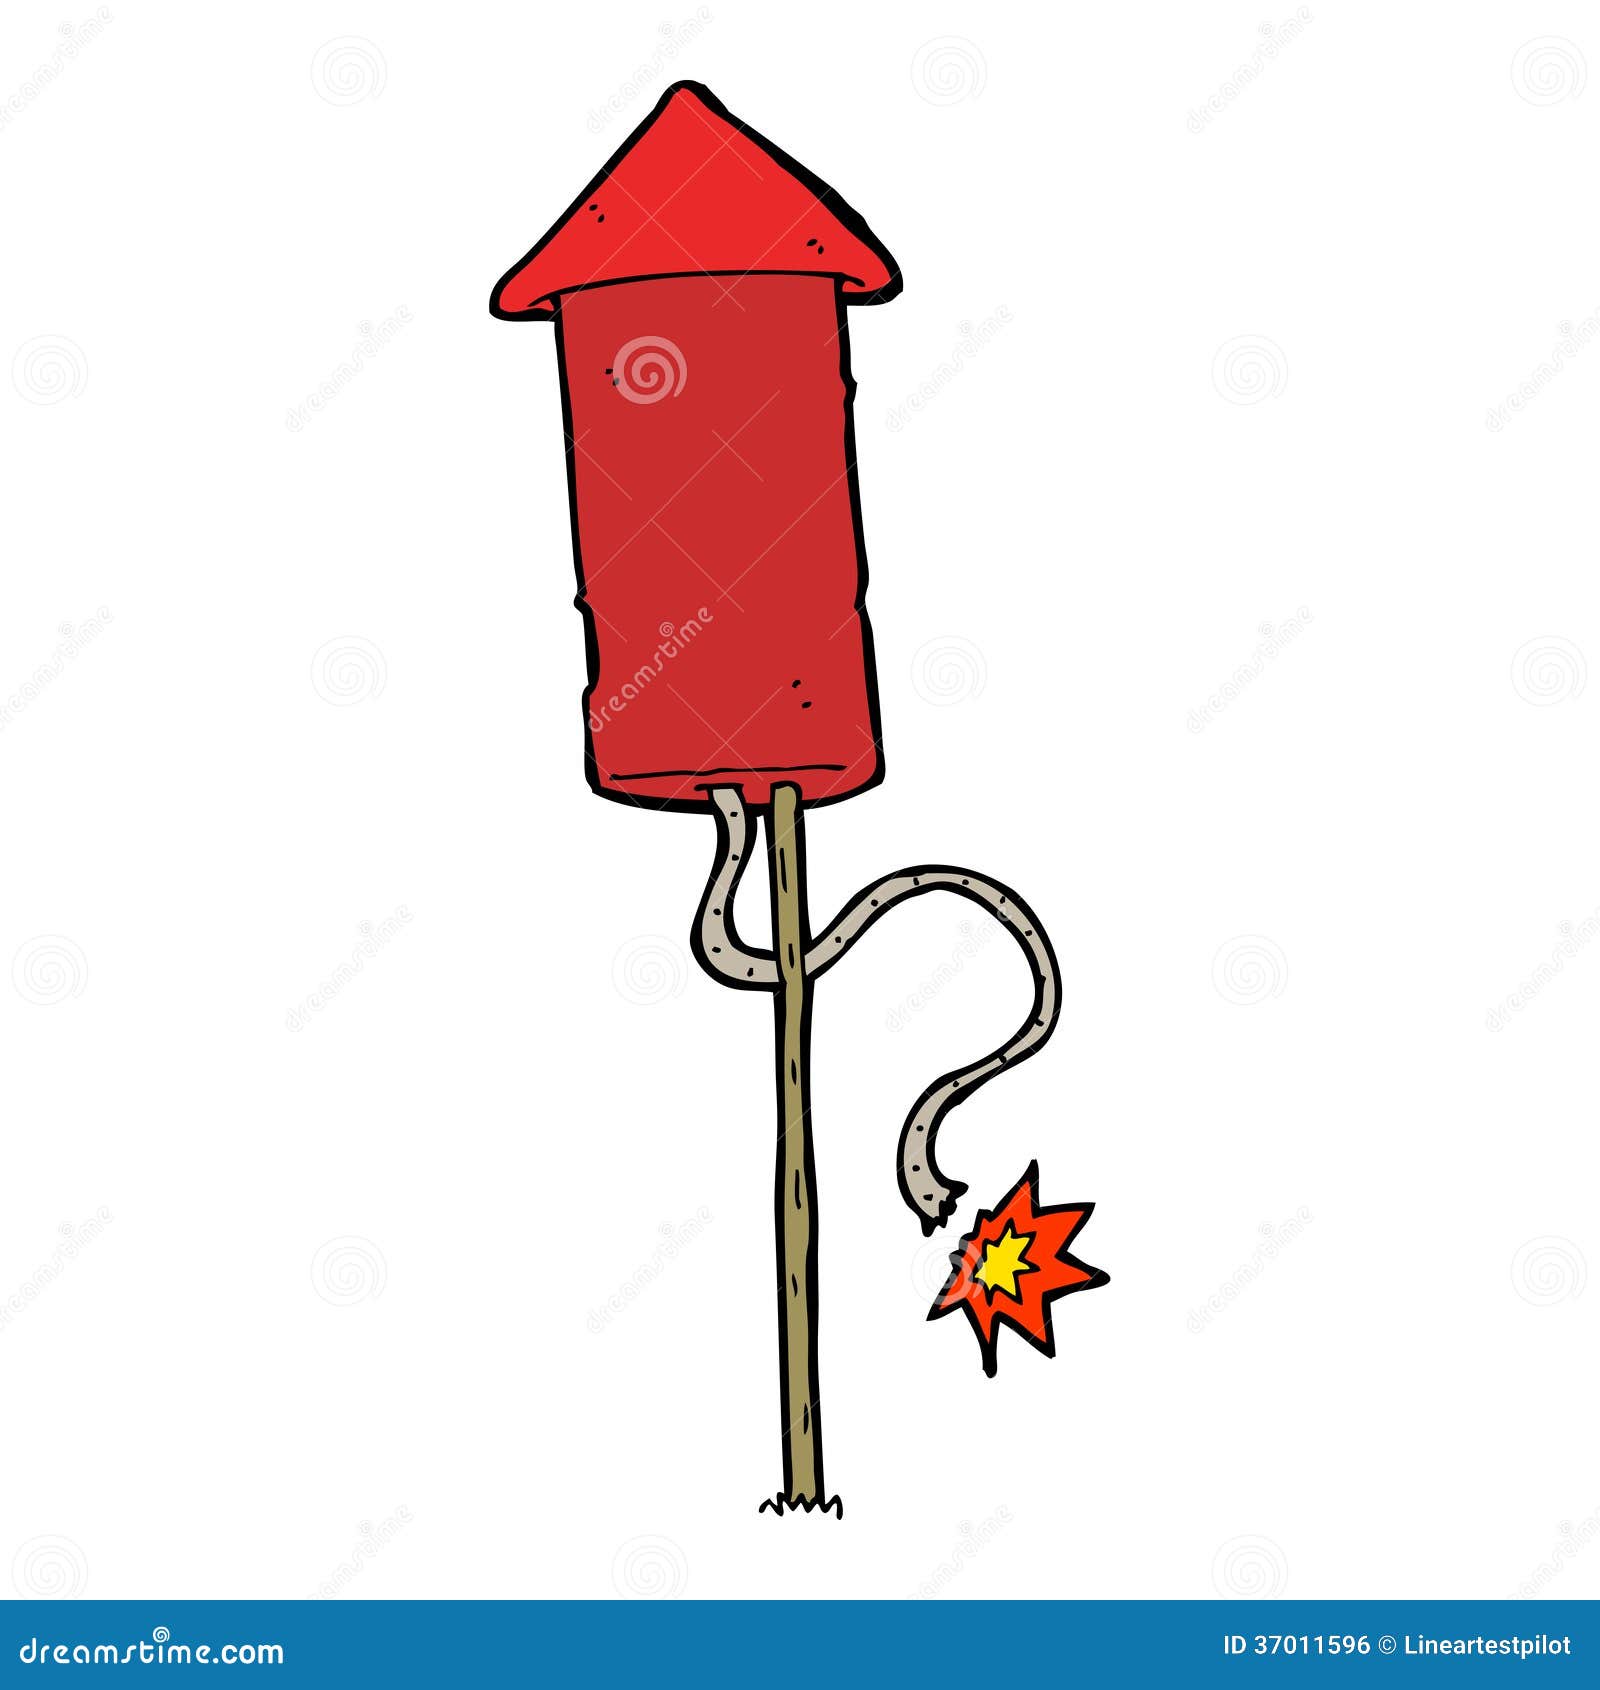 Cartoon firework stock vector. Illustration of drawing - 37011596